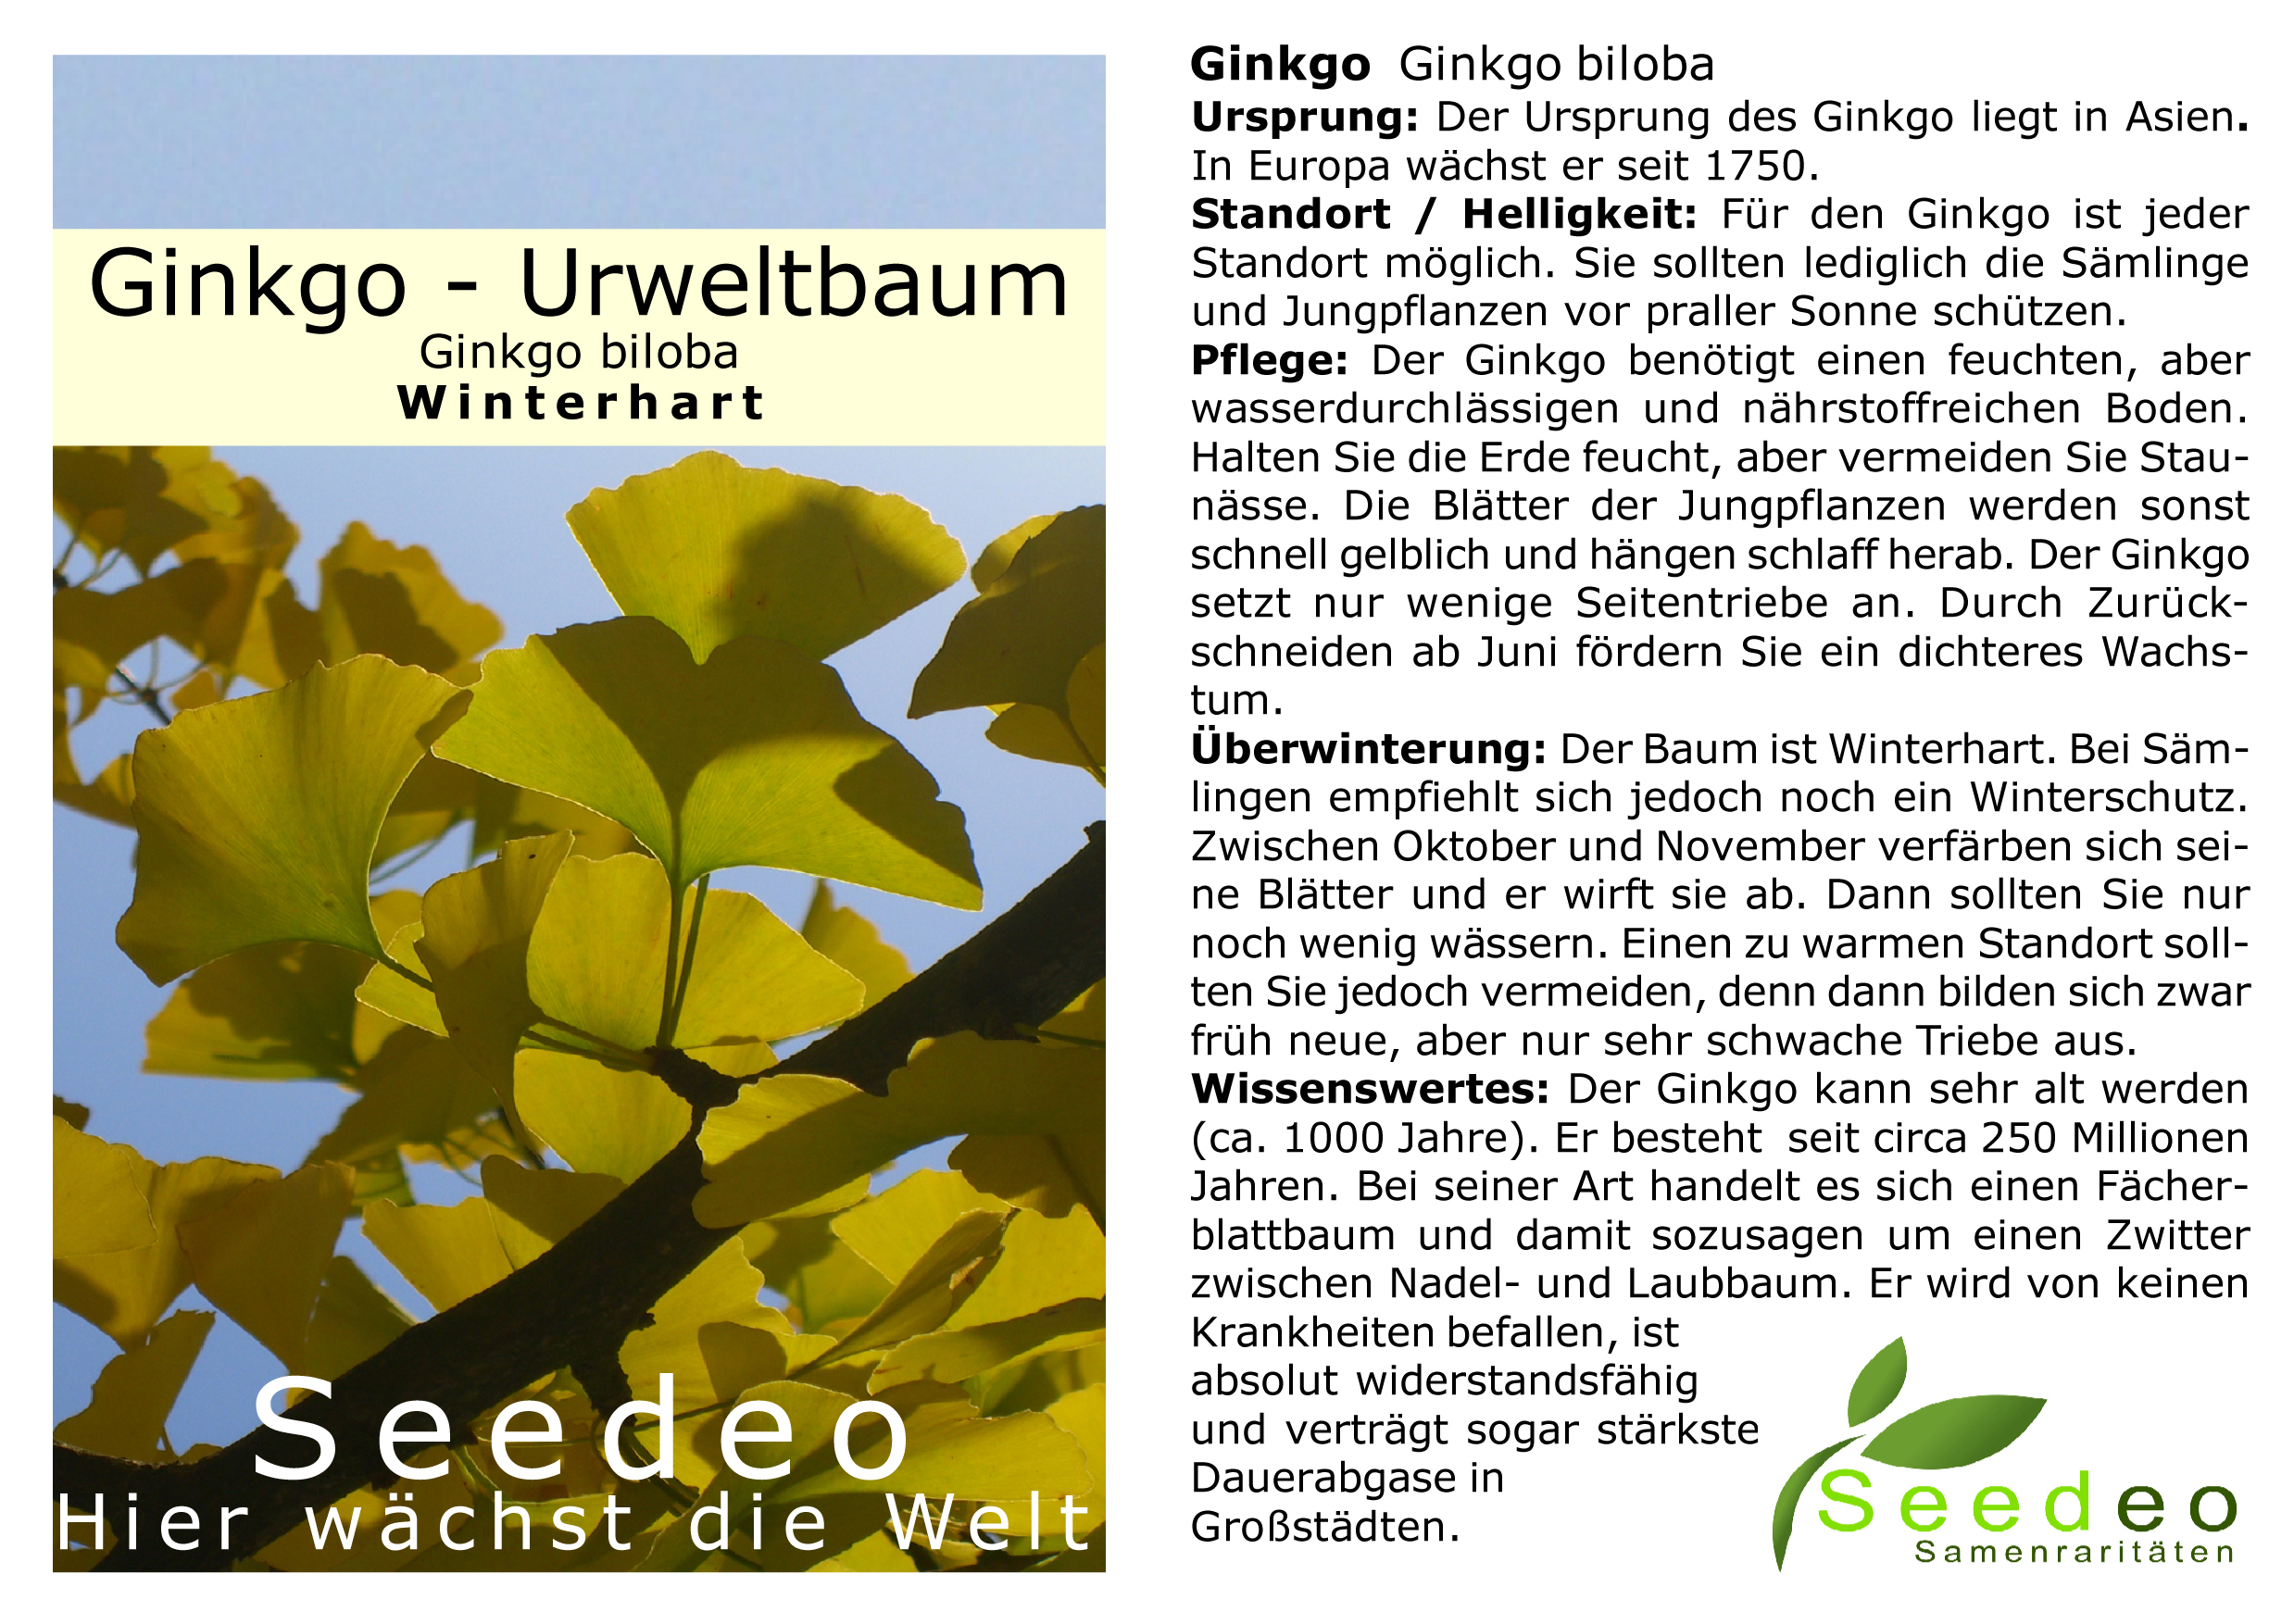 Seedeo® Ginkgo (Ginkgo biloba) Pflanze ca. 2,5 Jahre alt